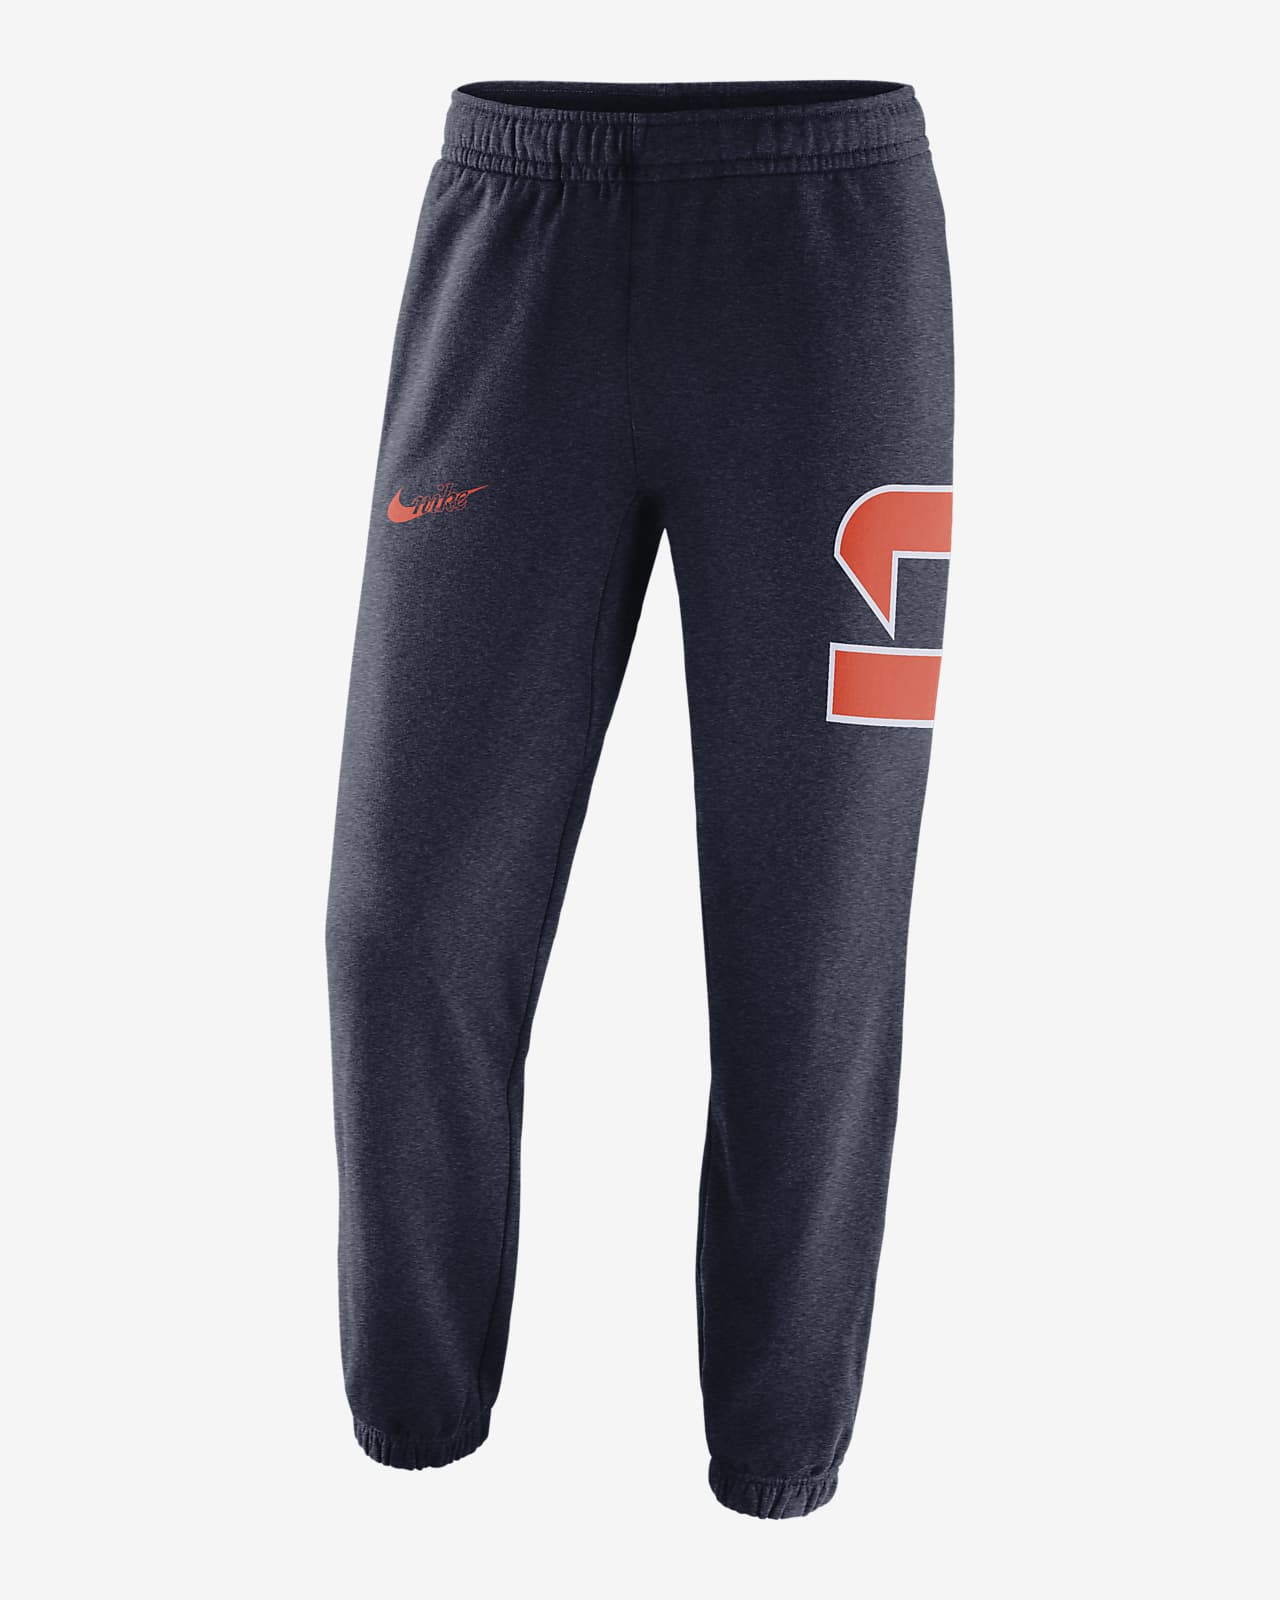 Nike College (Syracuse) Men's Fleece Pants